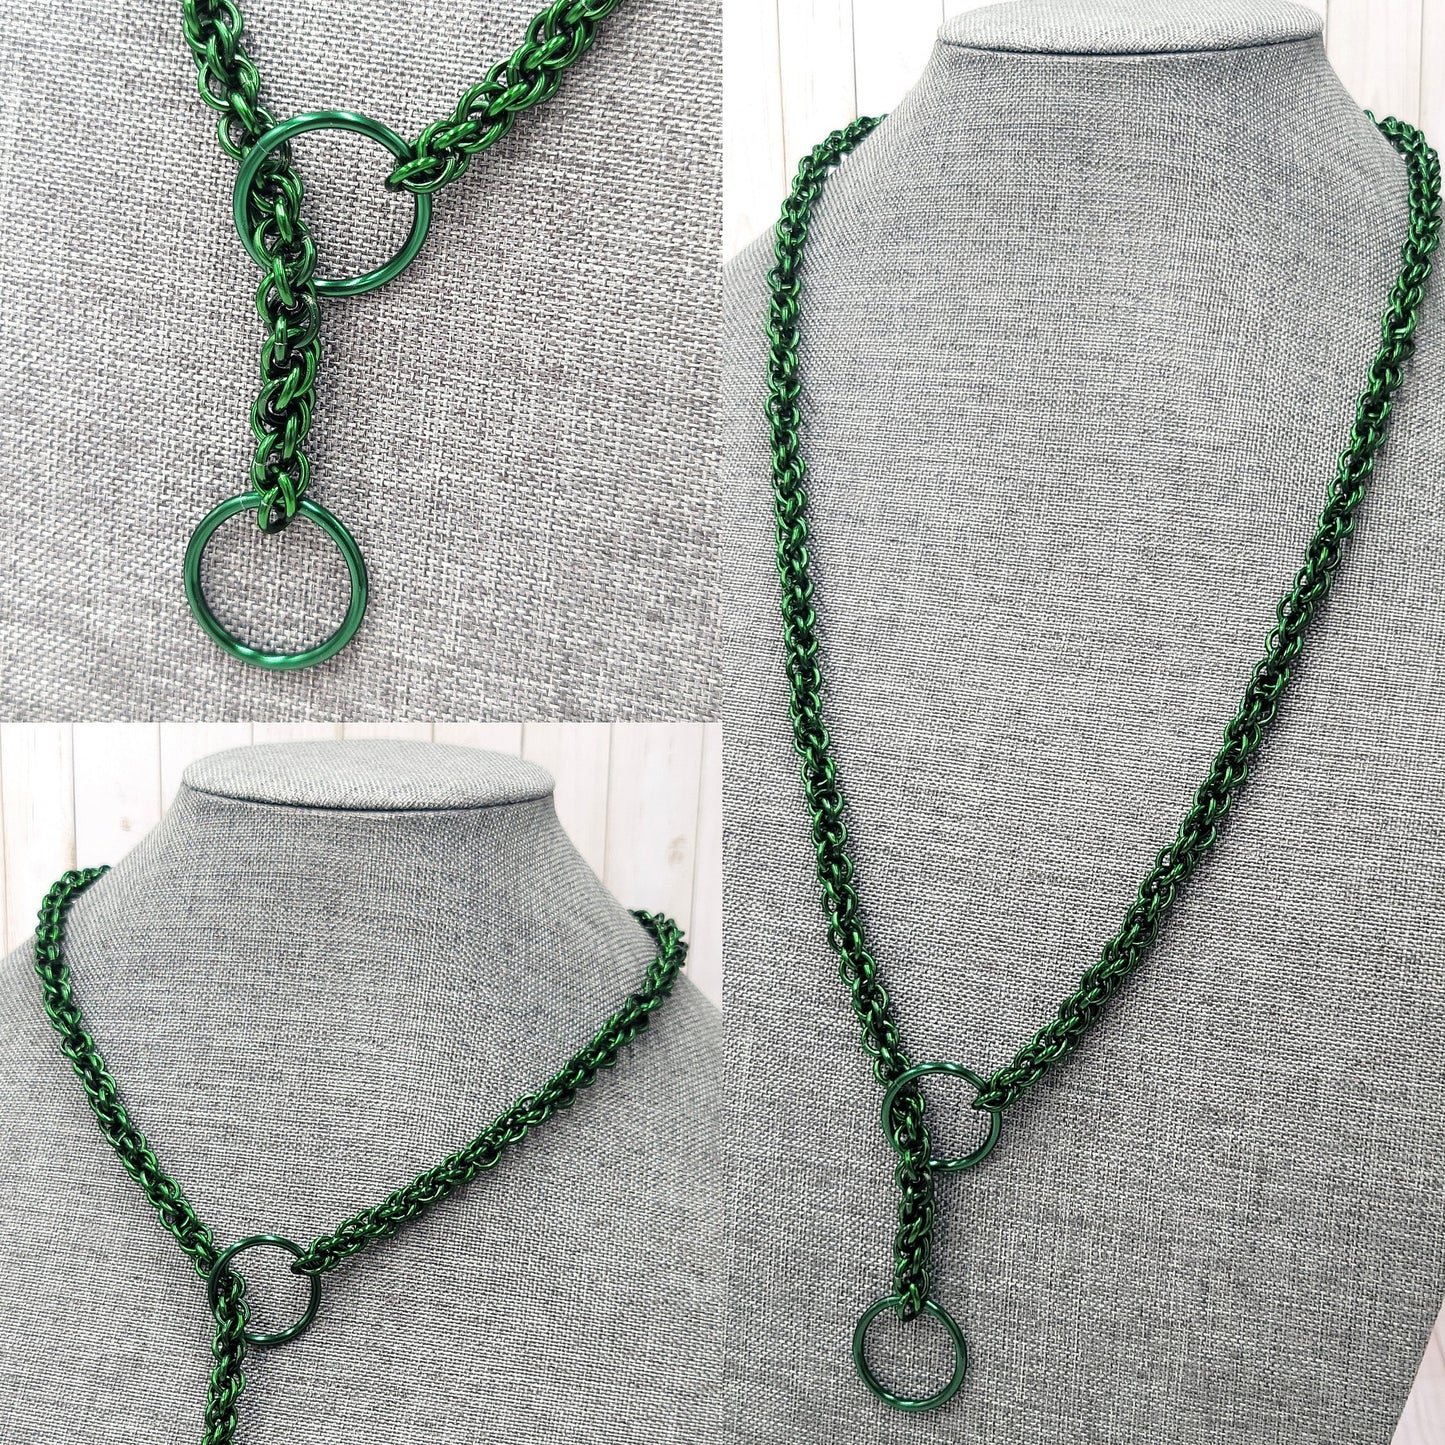 Solid Green Lariat "Choke" Chain